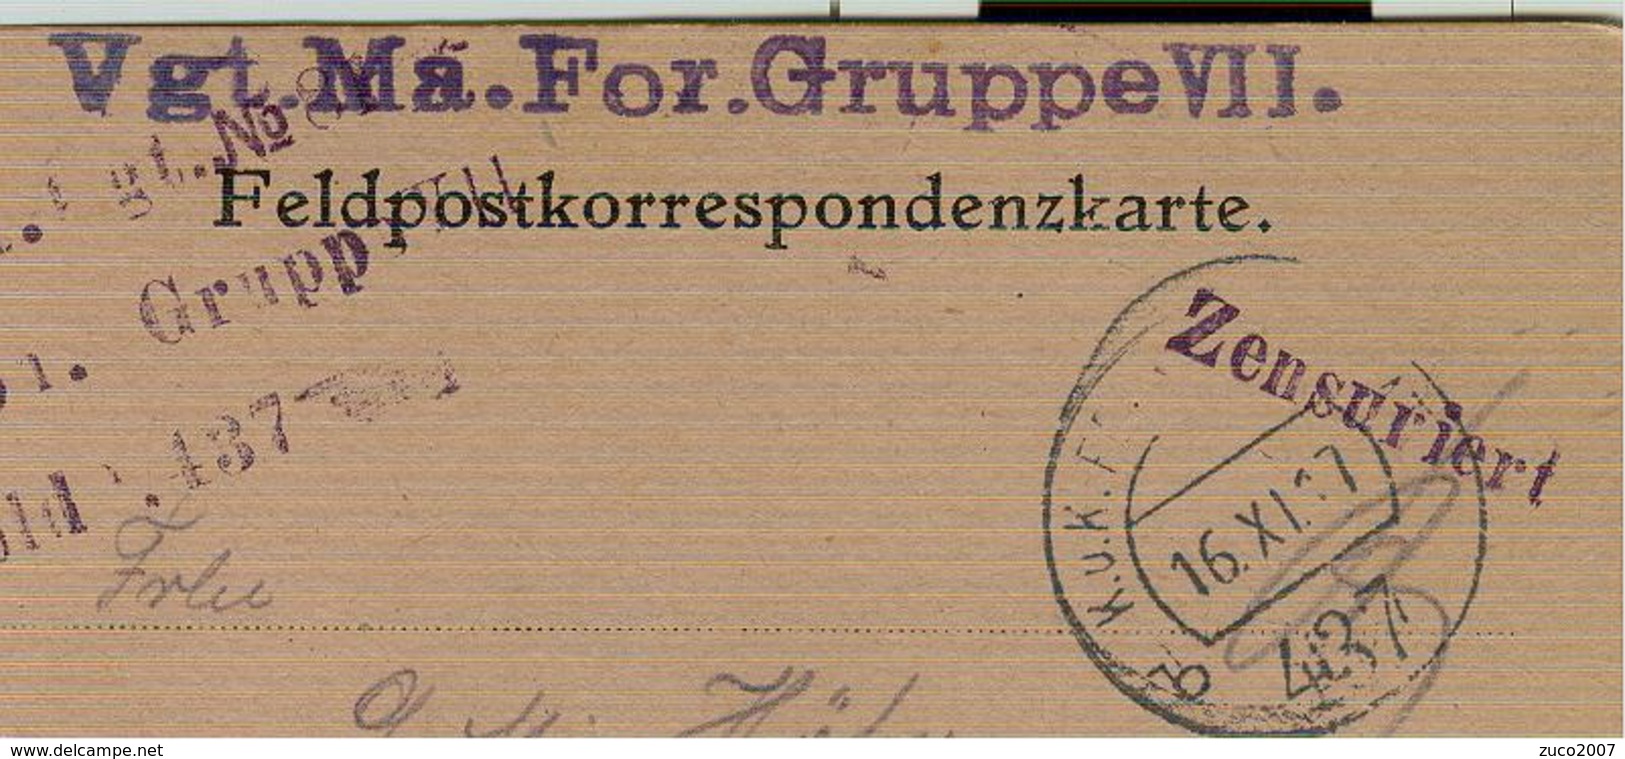 FELDPOSTKORRESPONDENZKARTE,K.u.K.-FELDPOST 437,VGT.MA.FOR.GRUPPE VII-ZENSURIERT,St. Michael Eppan,BOLZANO - 1914-18